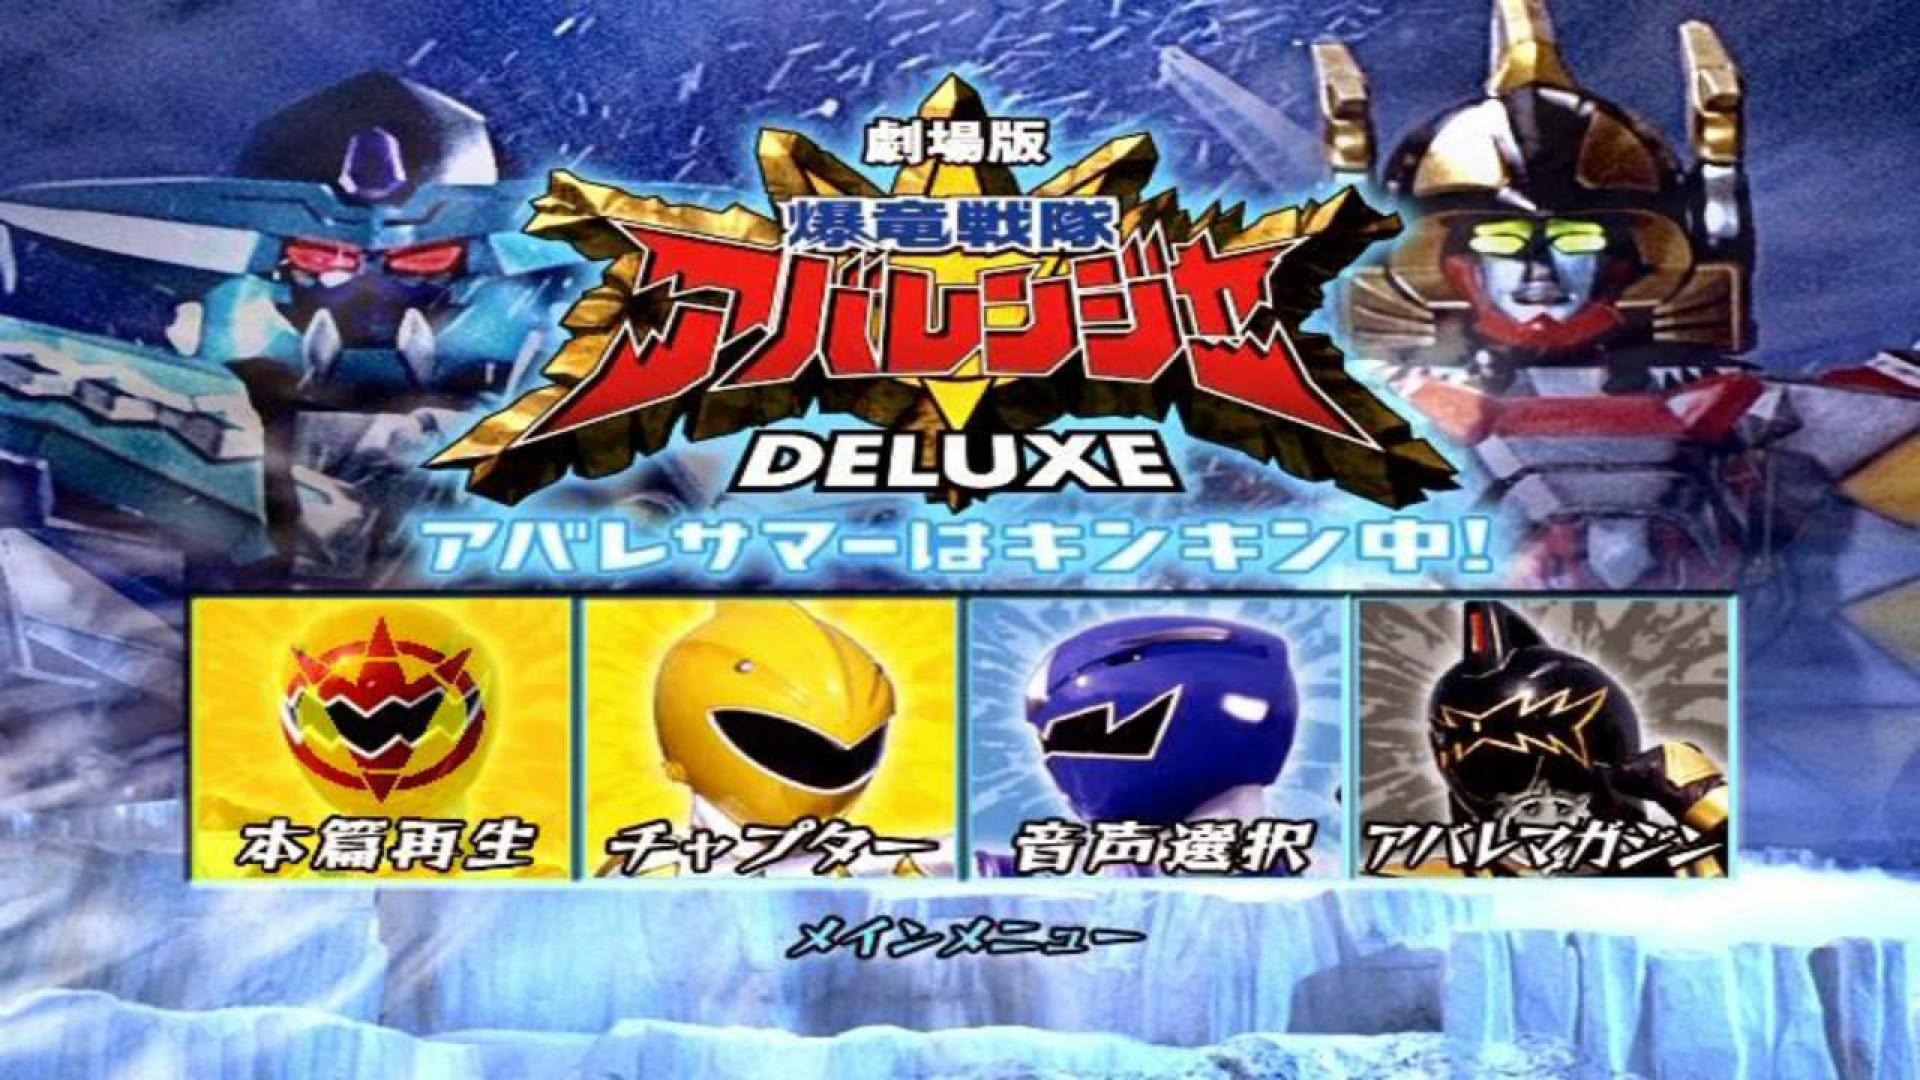 Bakuryu Sentai Abaranger Deluxe: Abare Summer is Freezing Cold!